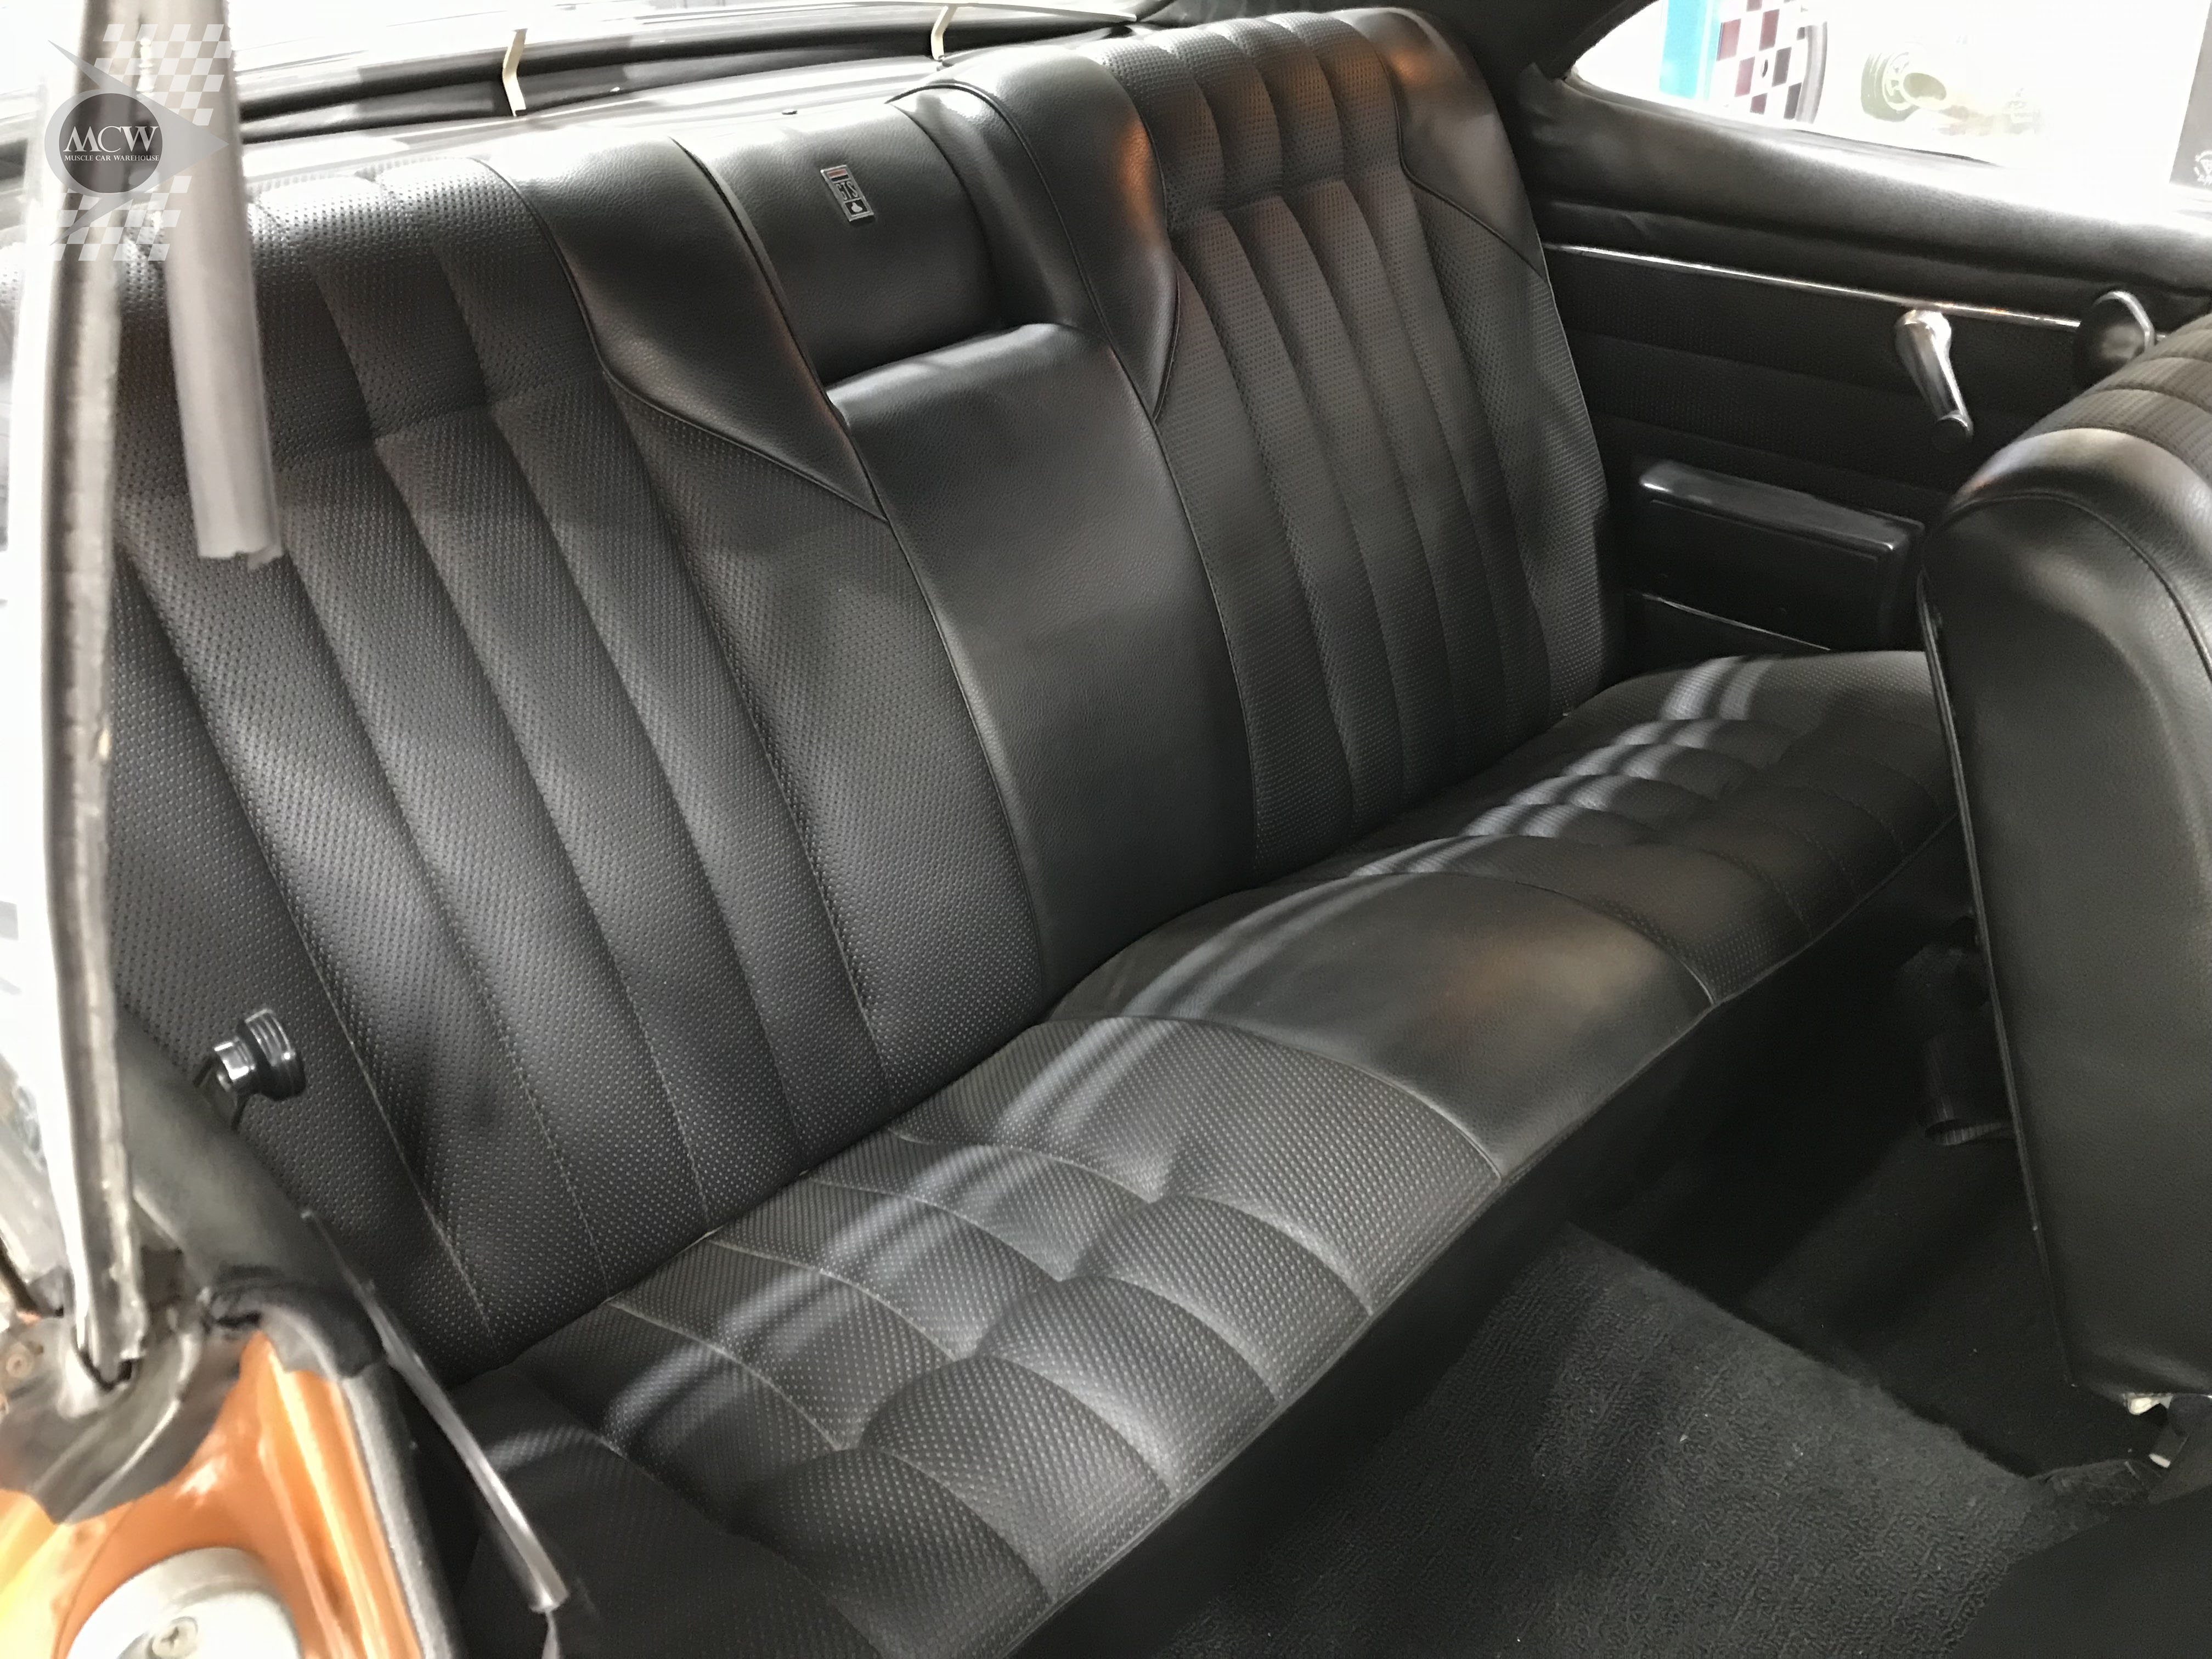 Holden HT GTS Monaro Interior | Muscle Car Warehouse